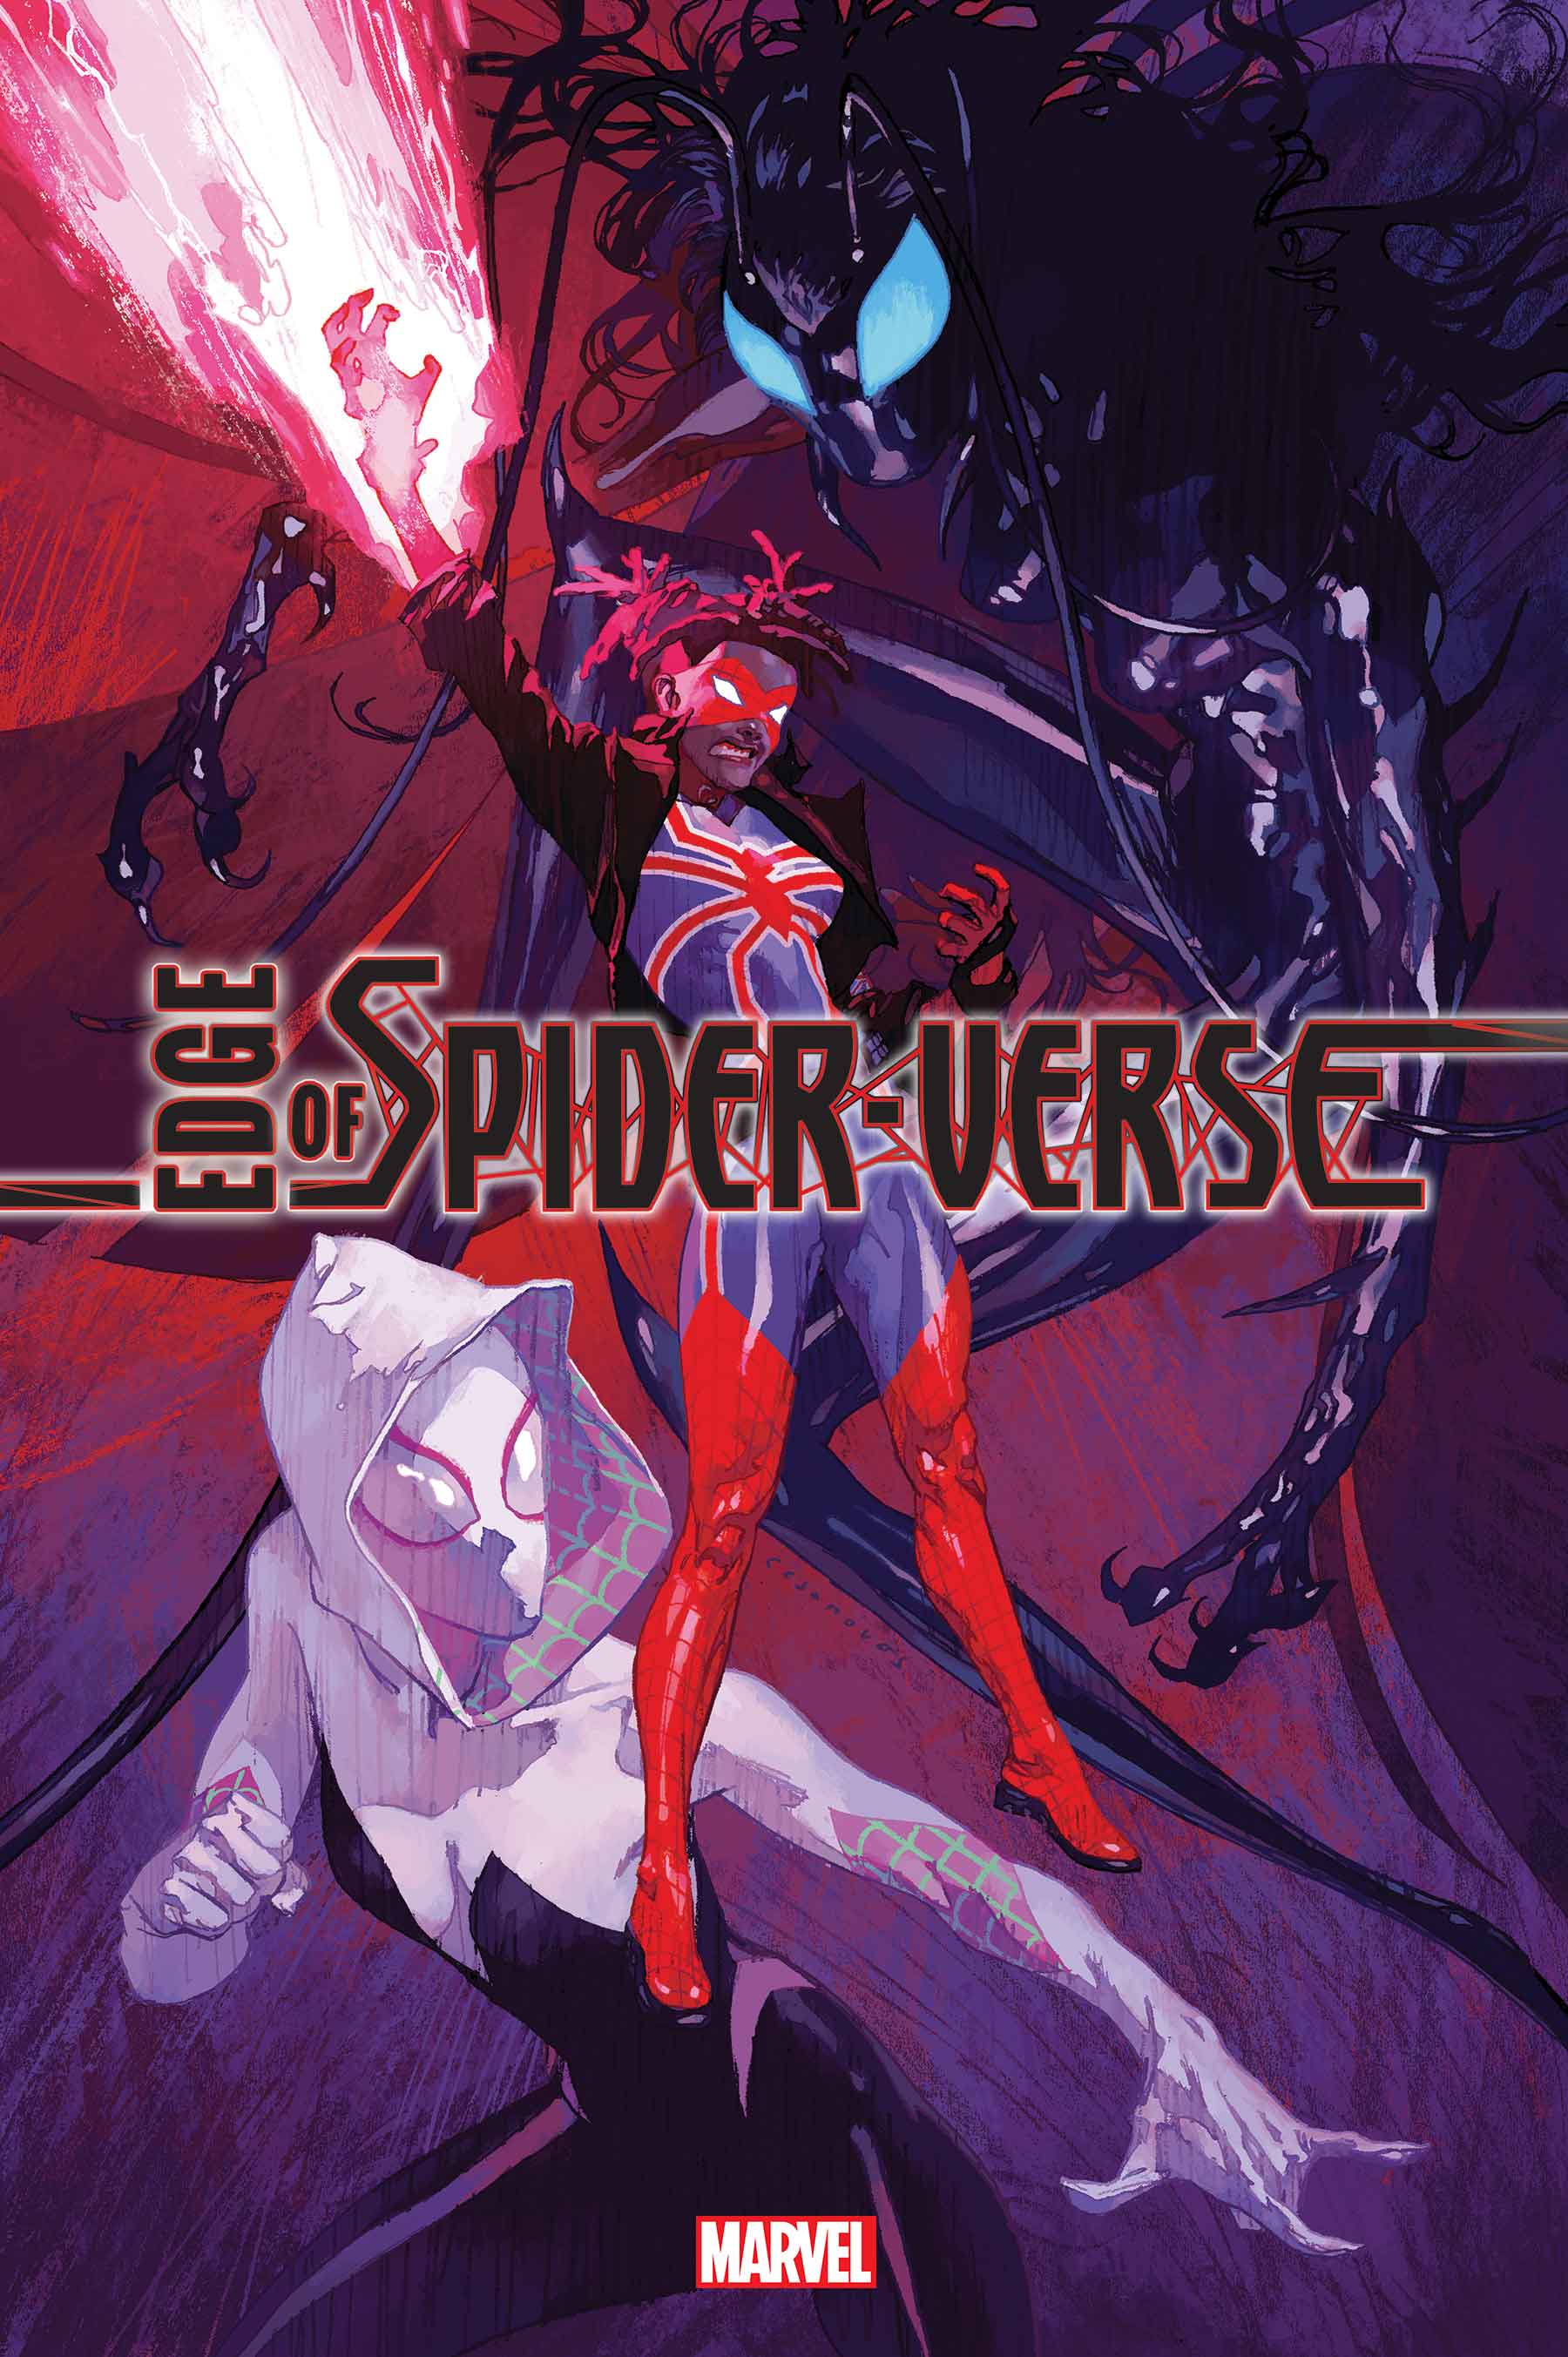 Couverture Edge of Spider-Verse #2 par Josemaria Casanovas